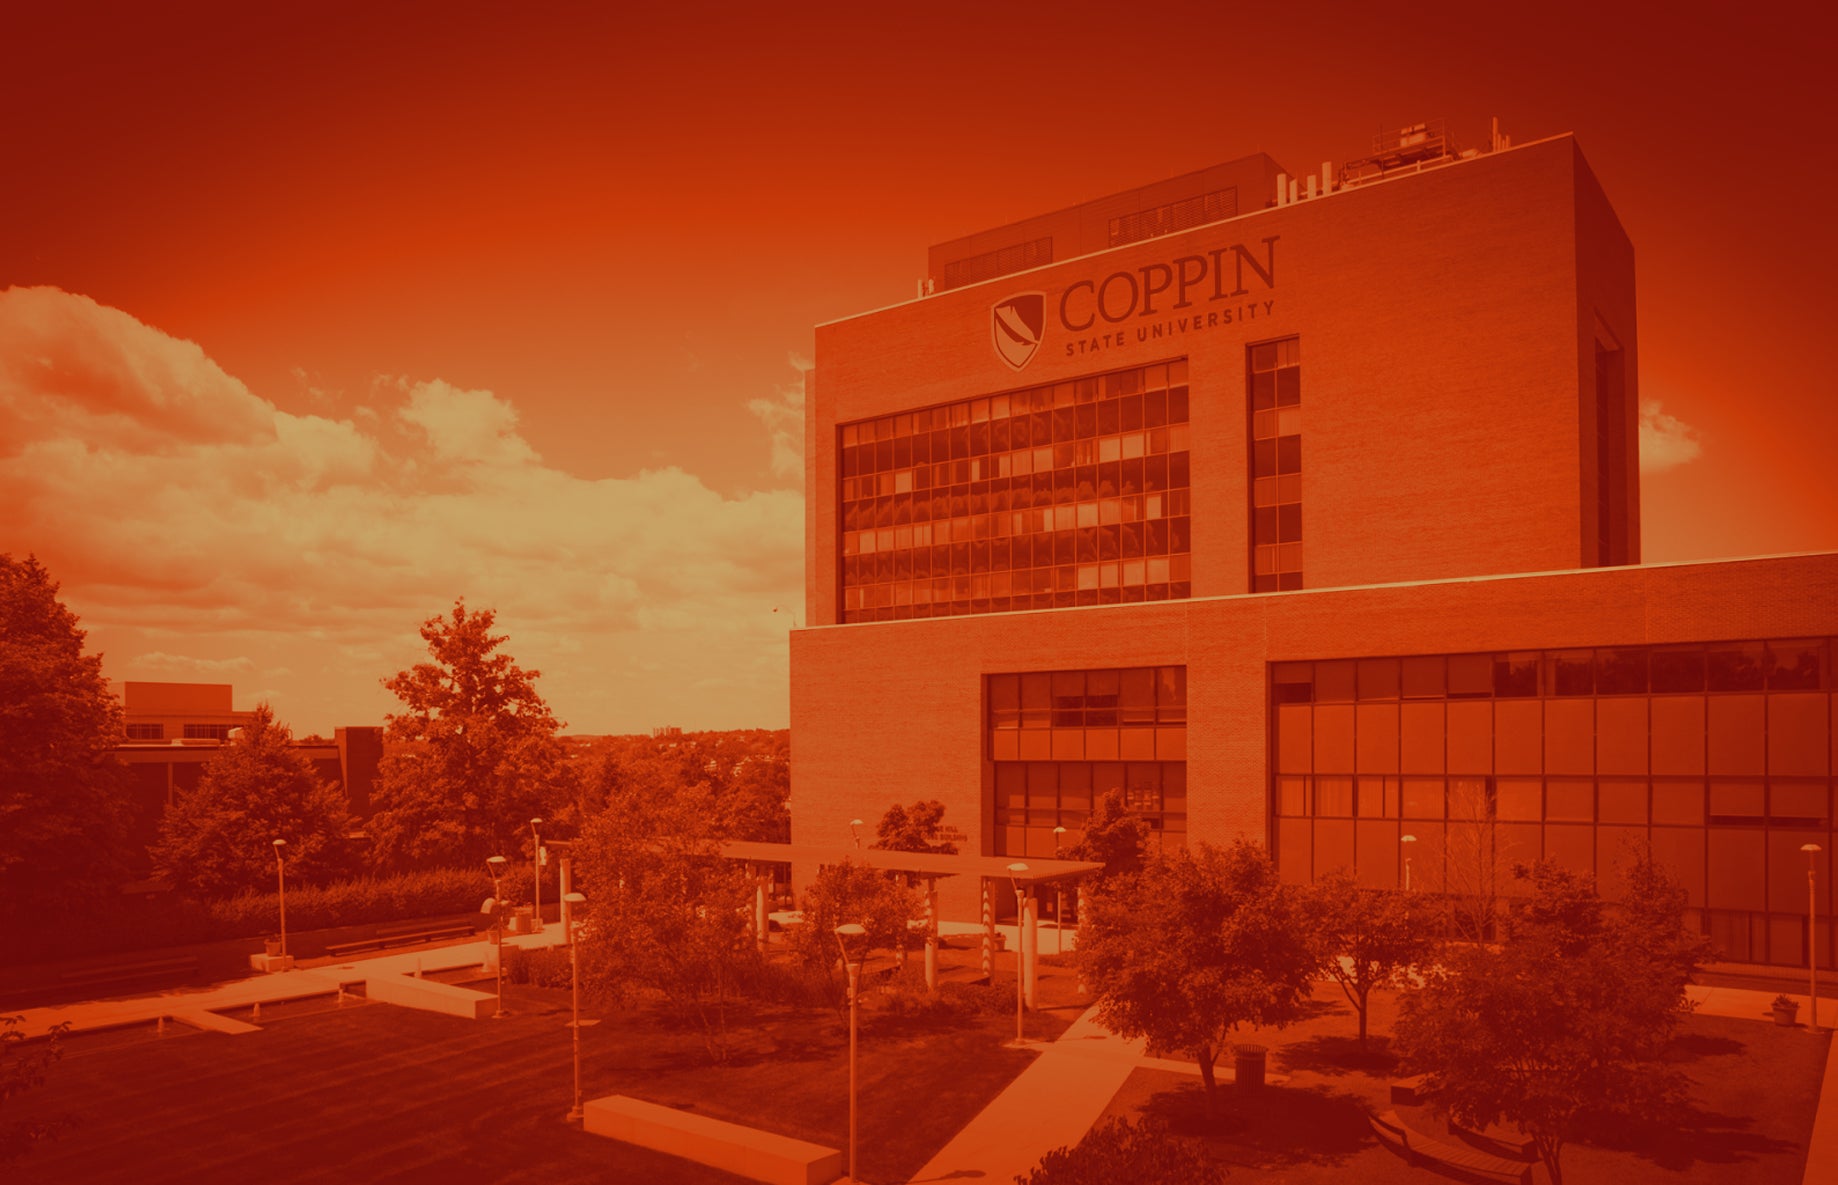 Coppin State University